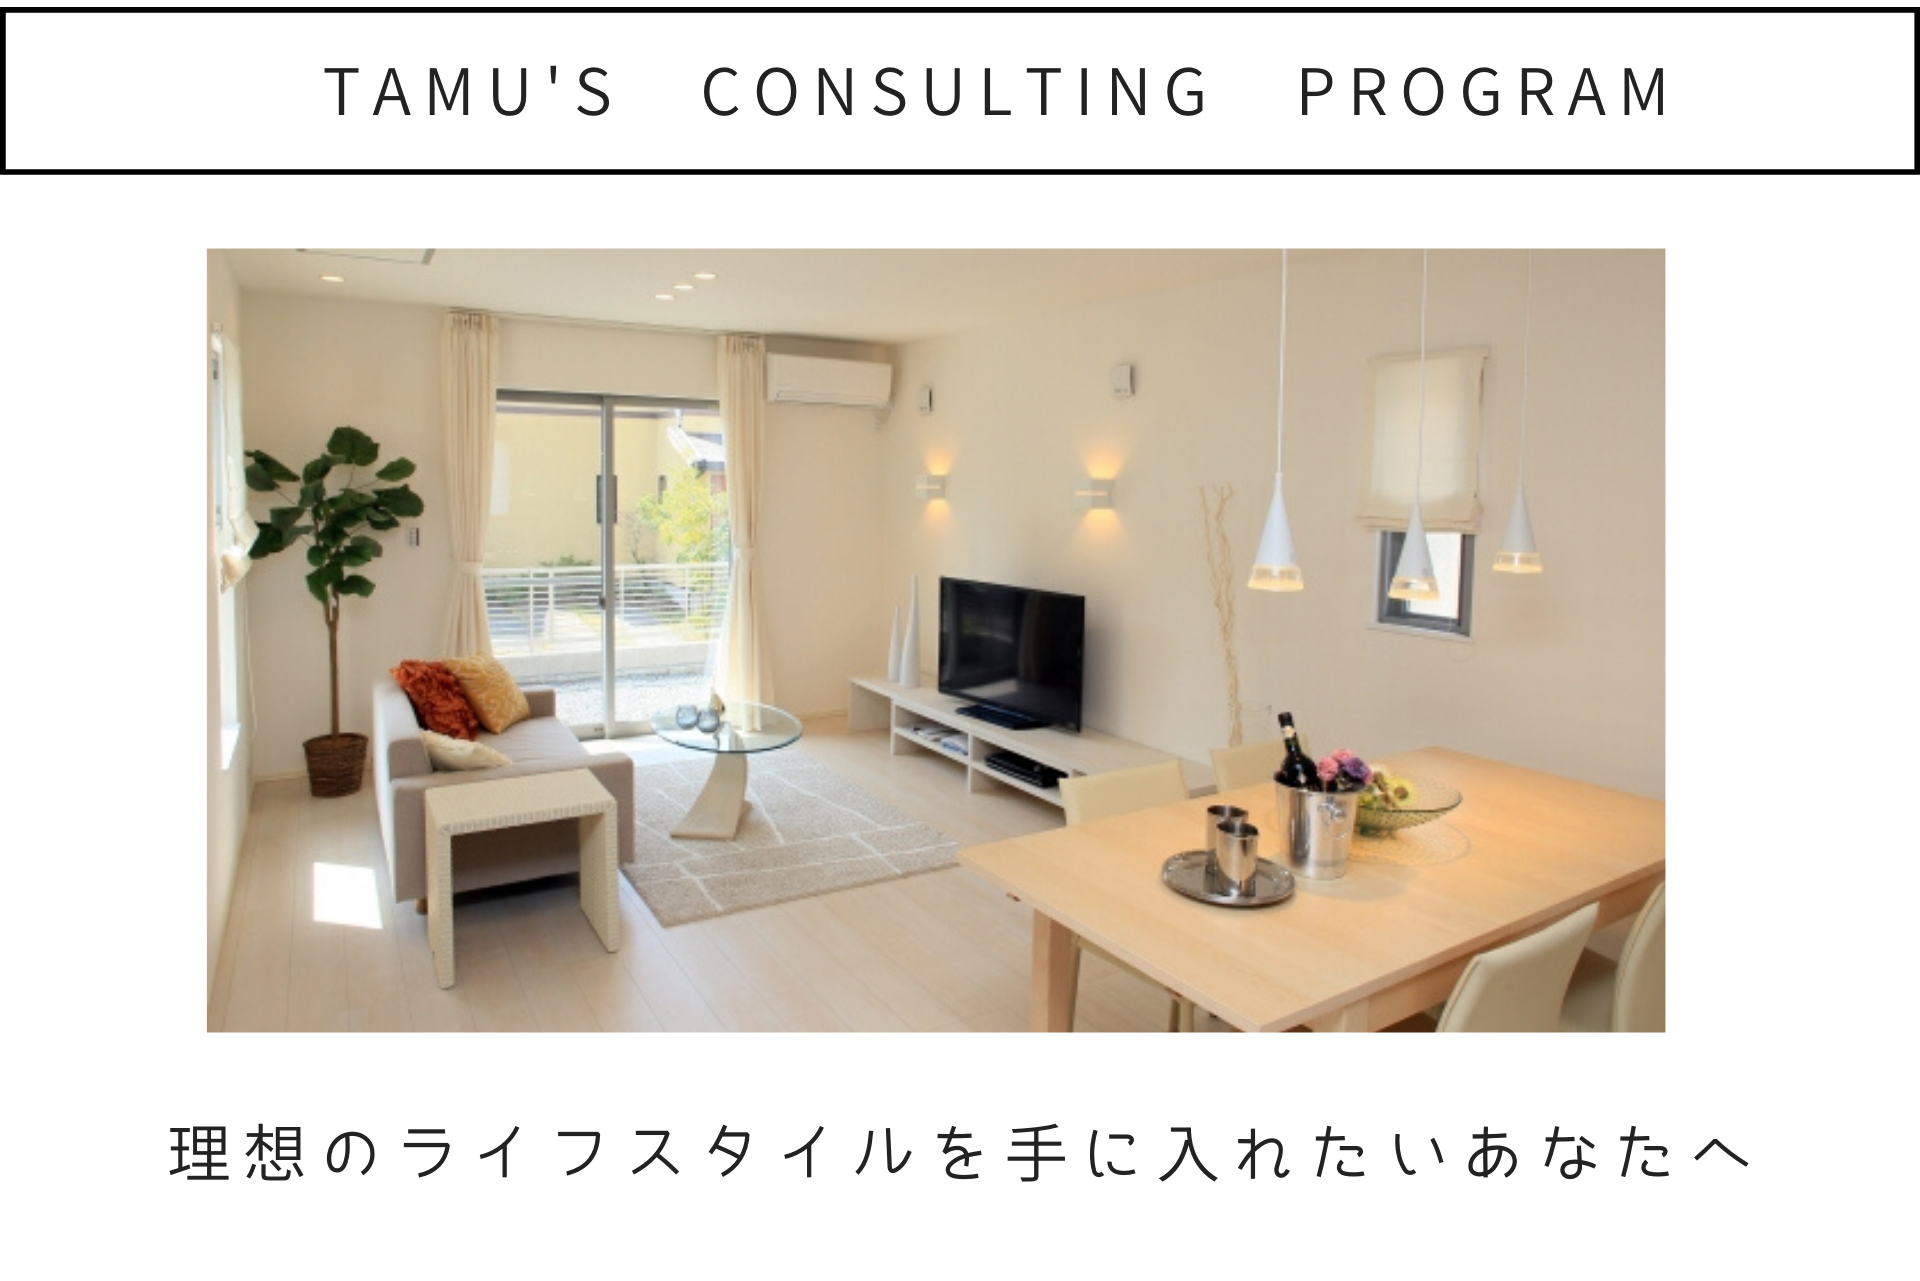 Tamu's Consulting Program